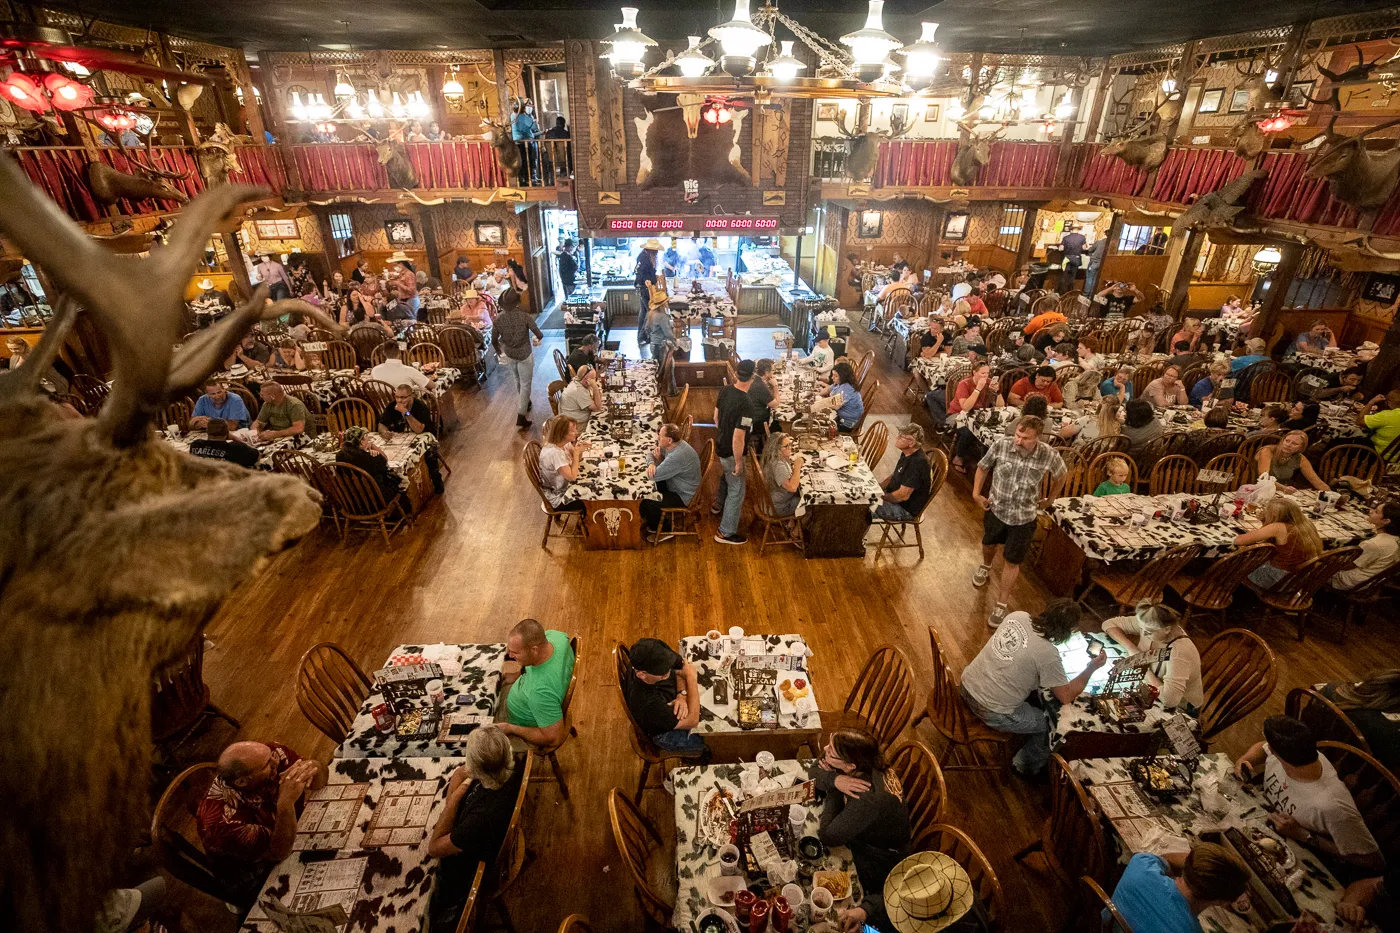 Inside The Big Texan Steak Ranch in Amarillo, Texas